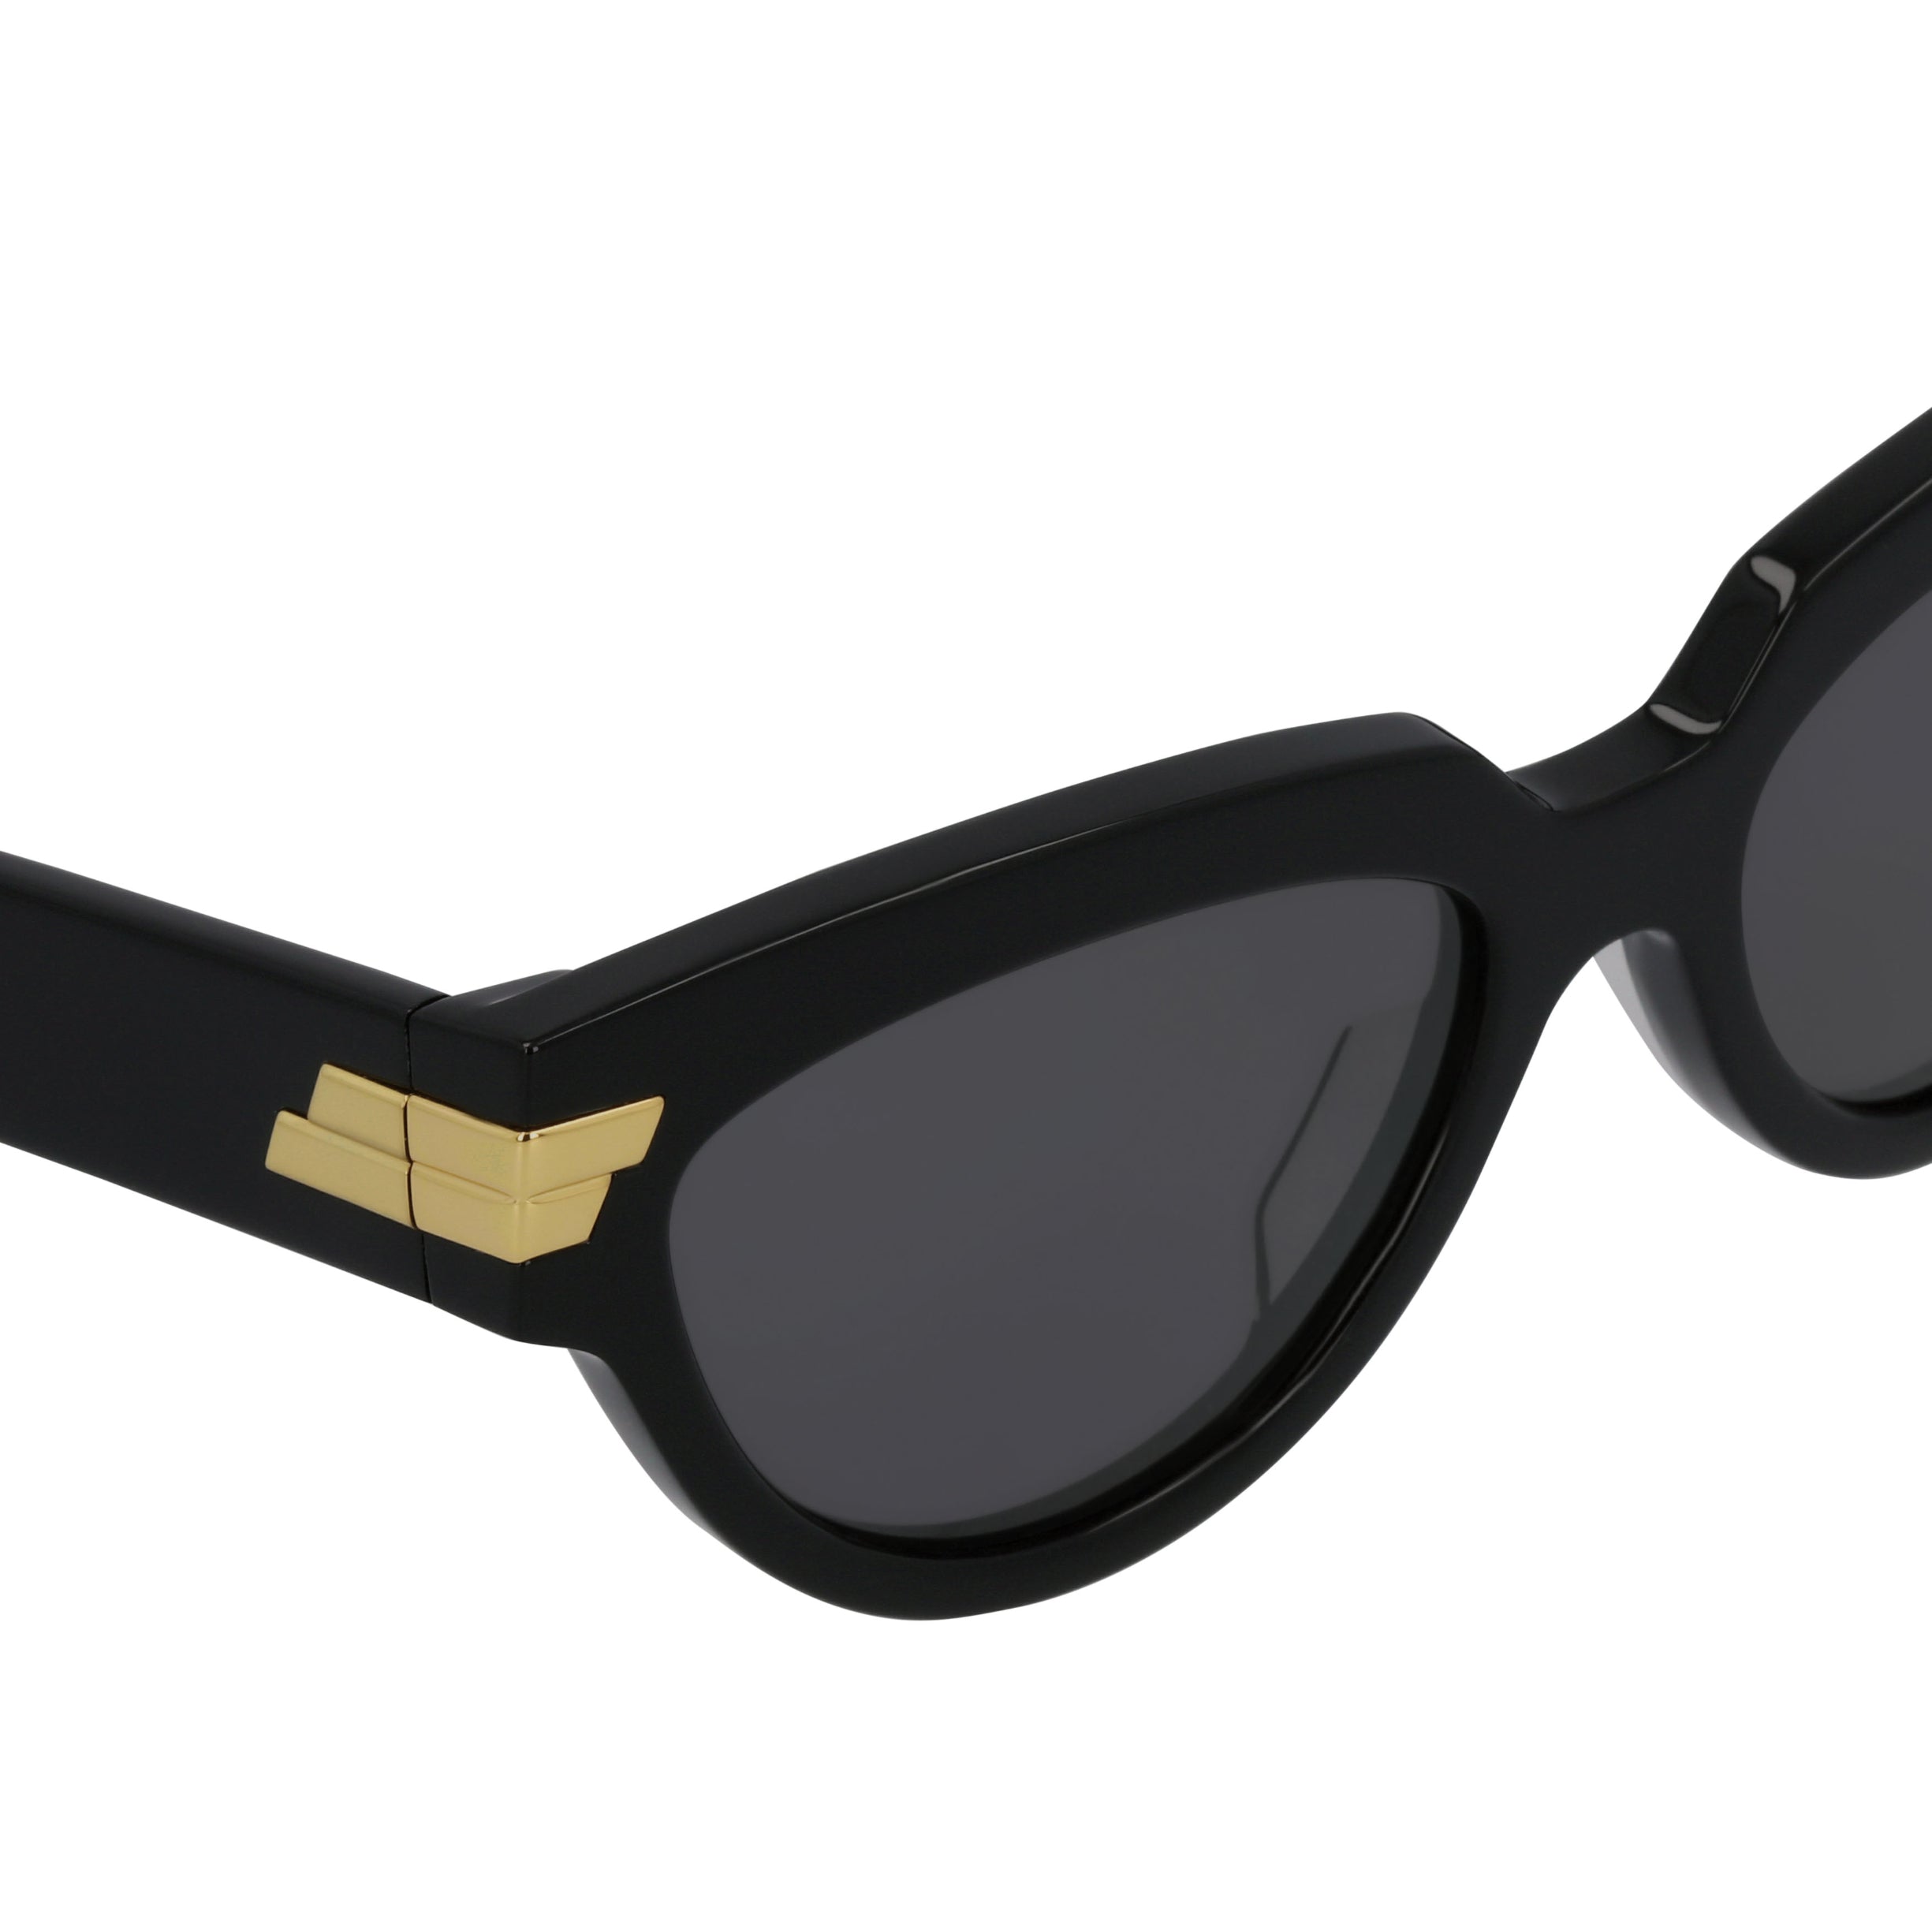 Buy Bottega Veneta Sunglasses 'Semi Shiny Solid Black' - BV1086S